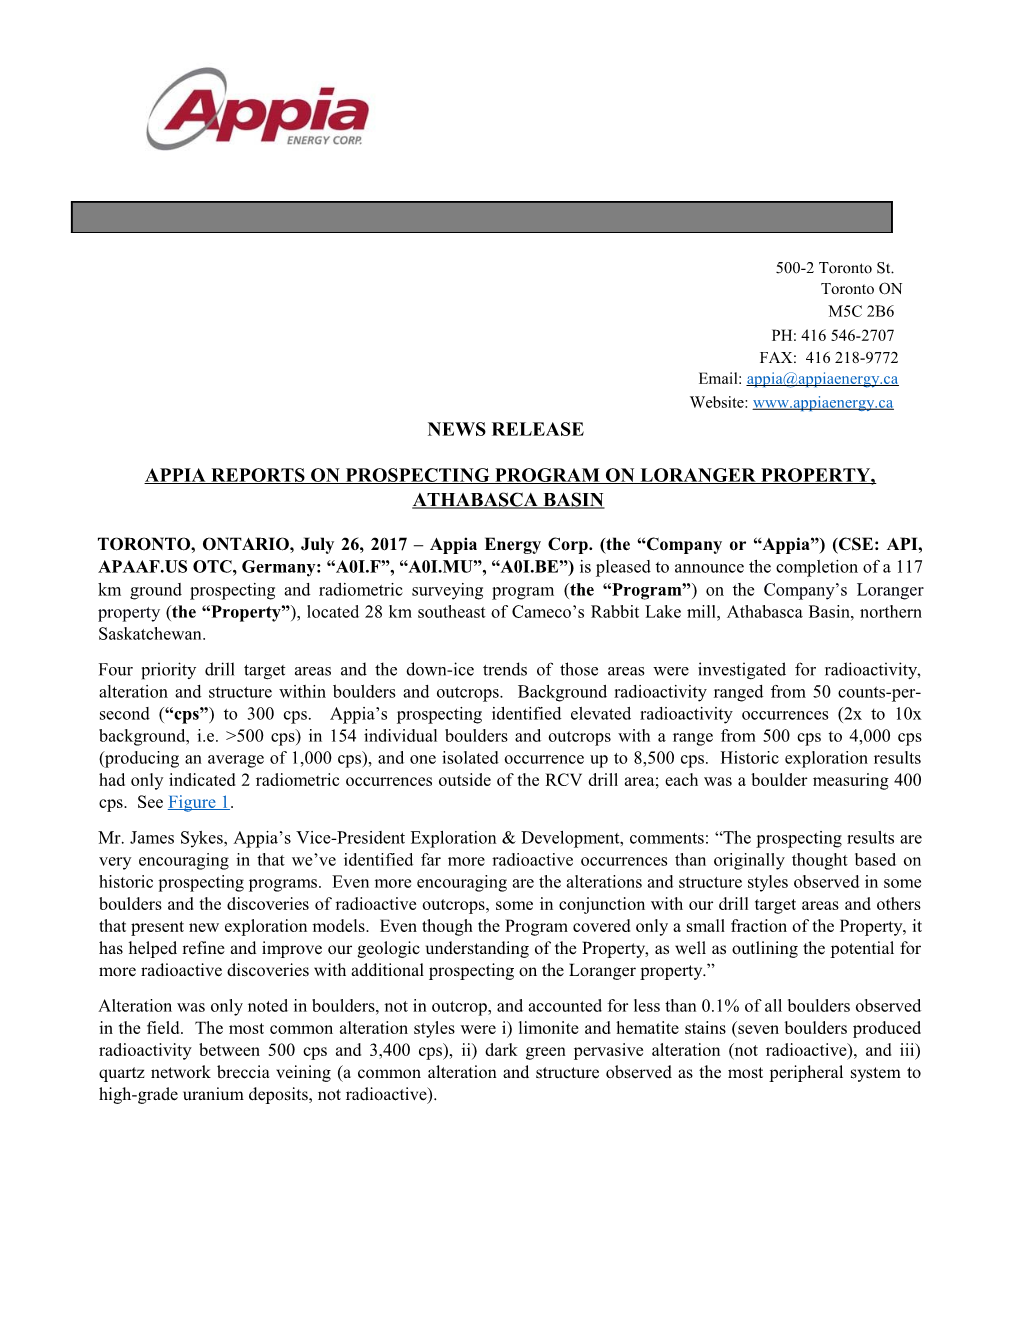 Appia Reports on Prospecting Program on Loranger Property, Athabasca Basin